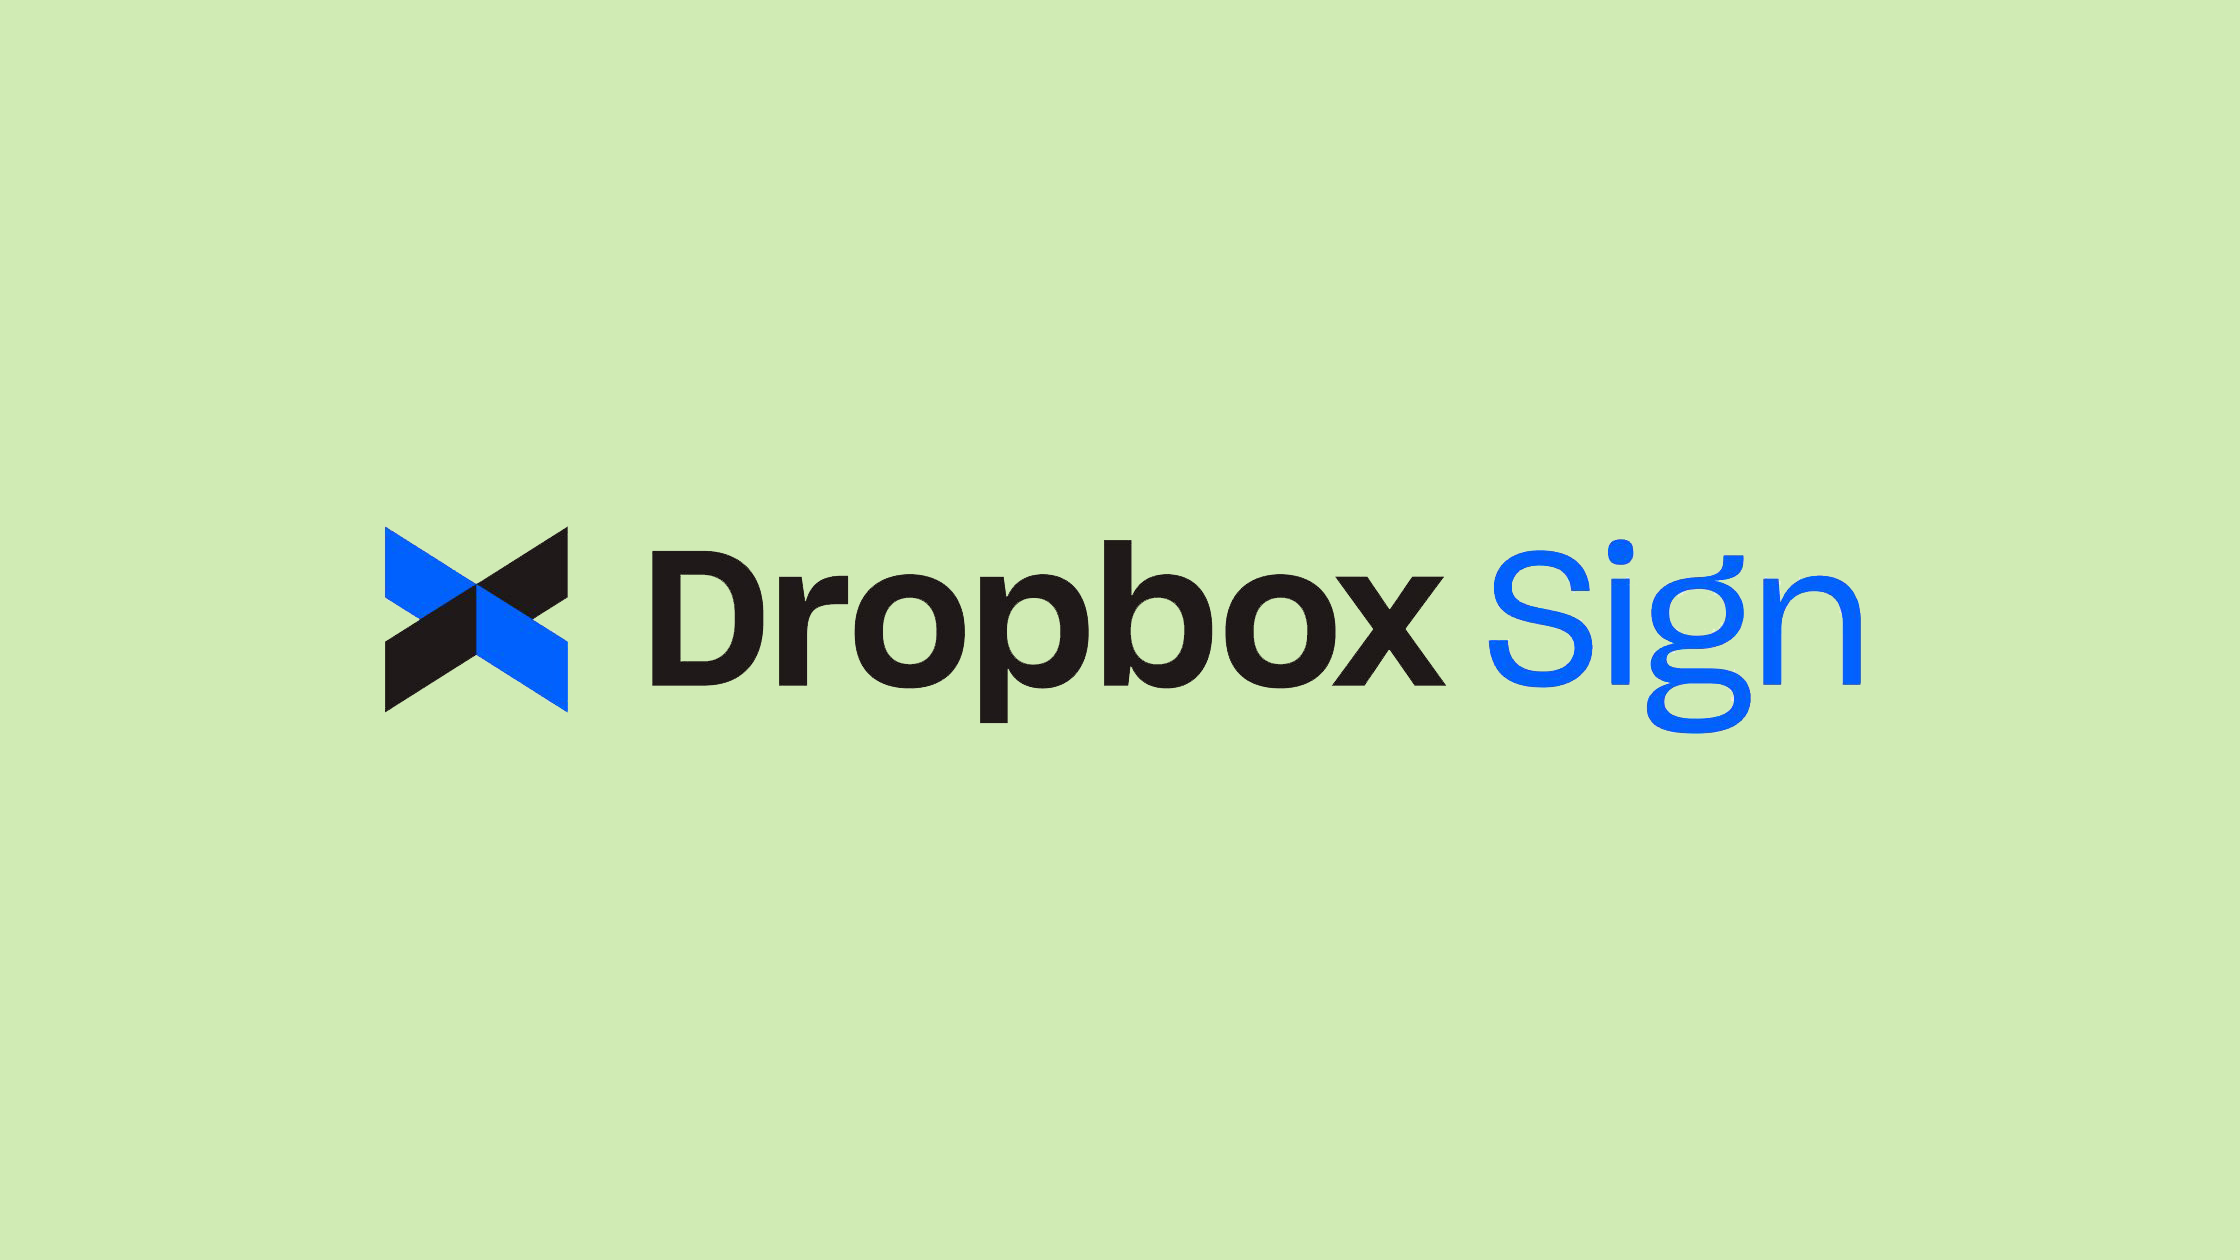 Dropbox Sign